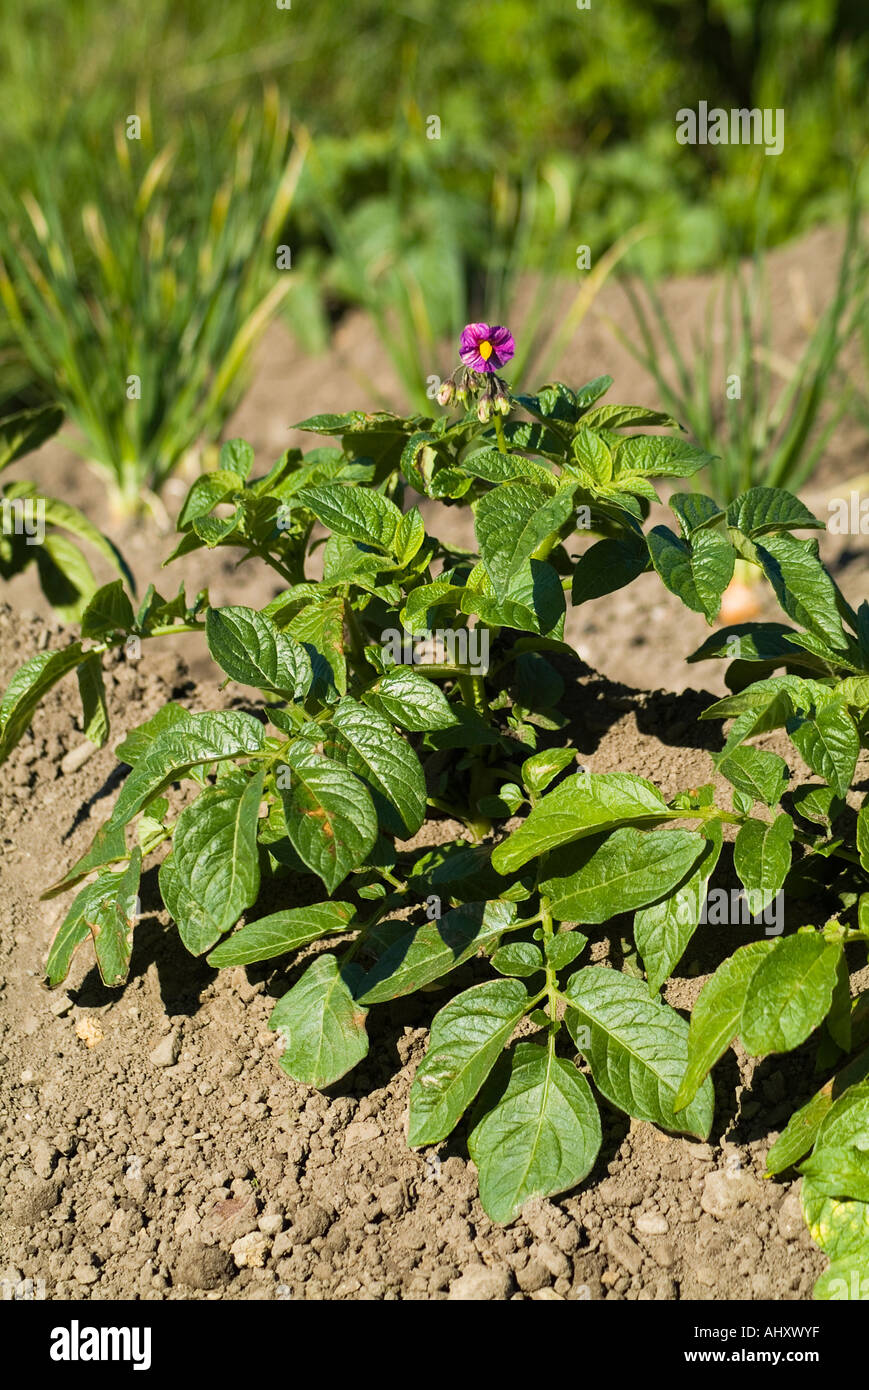 dh Vegetable GARDENING UK Purple flowering Potato plant drill in garden root crop growing flower plants Stock Photo